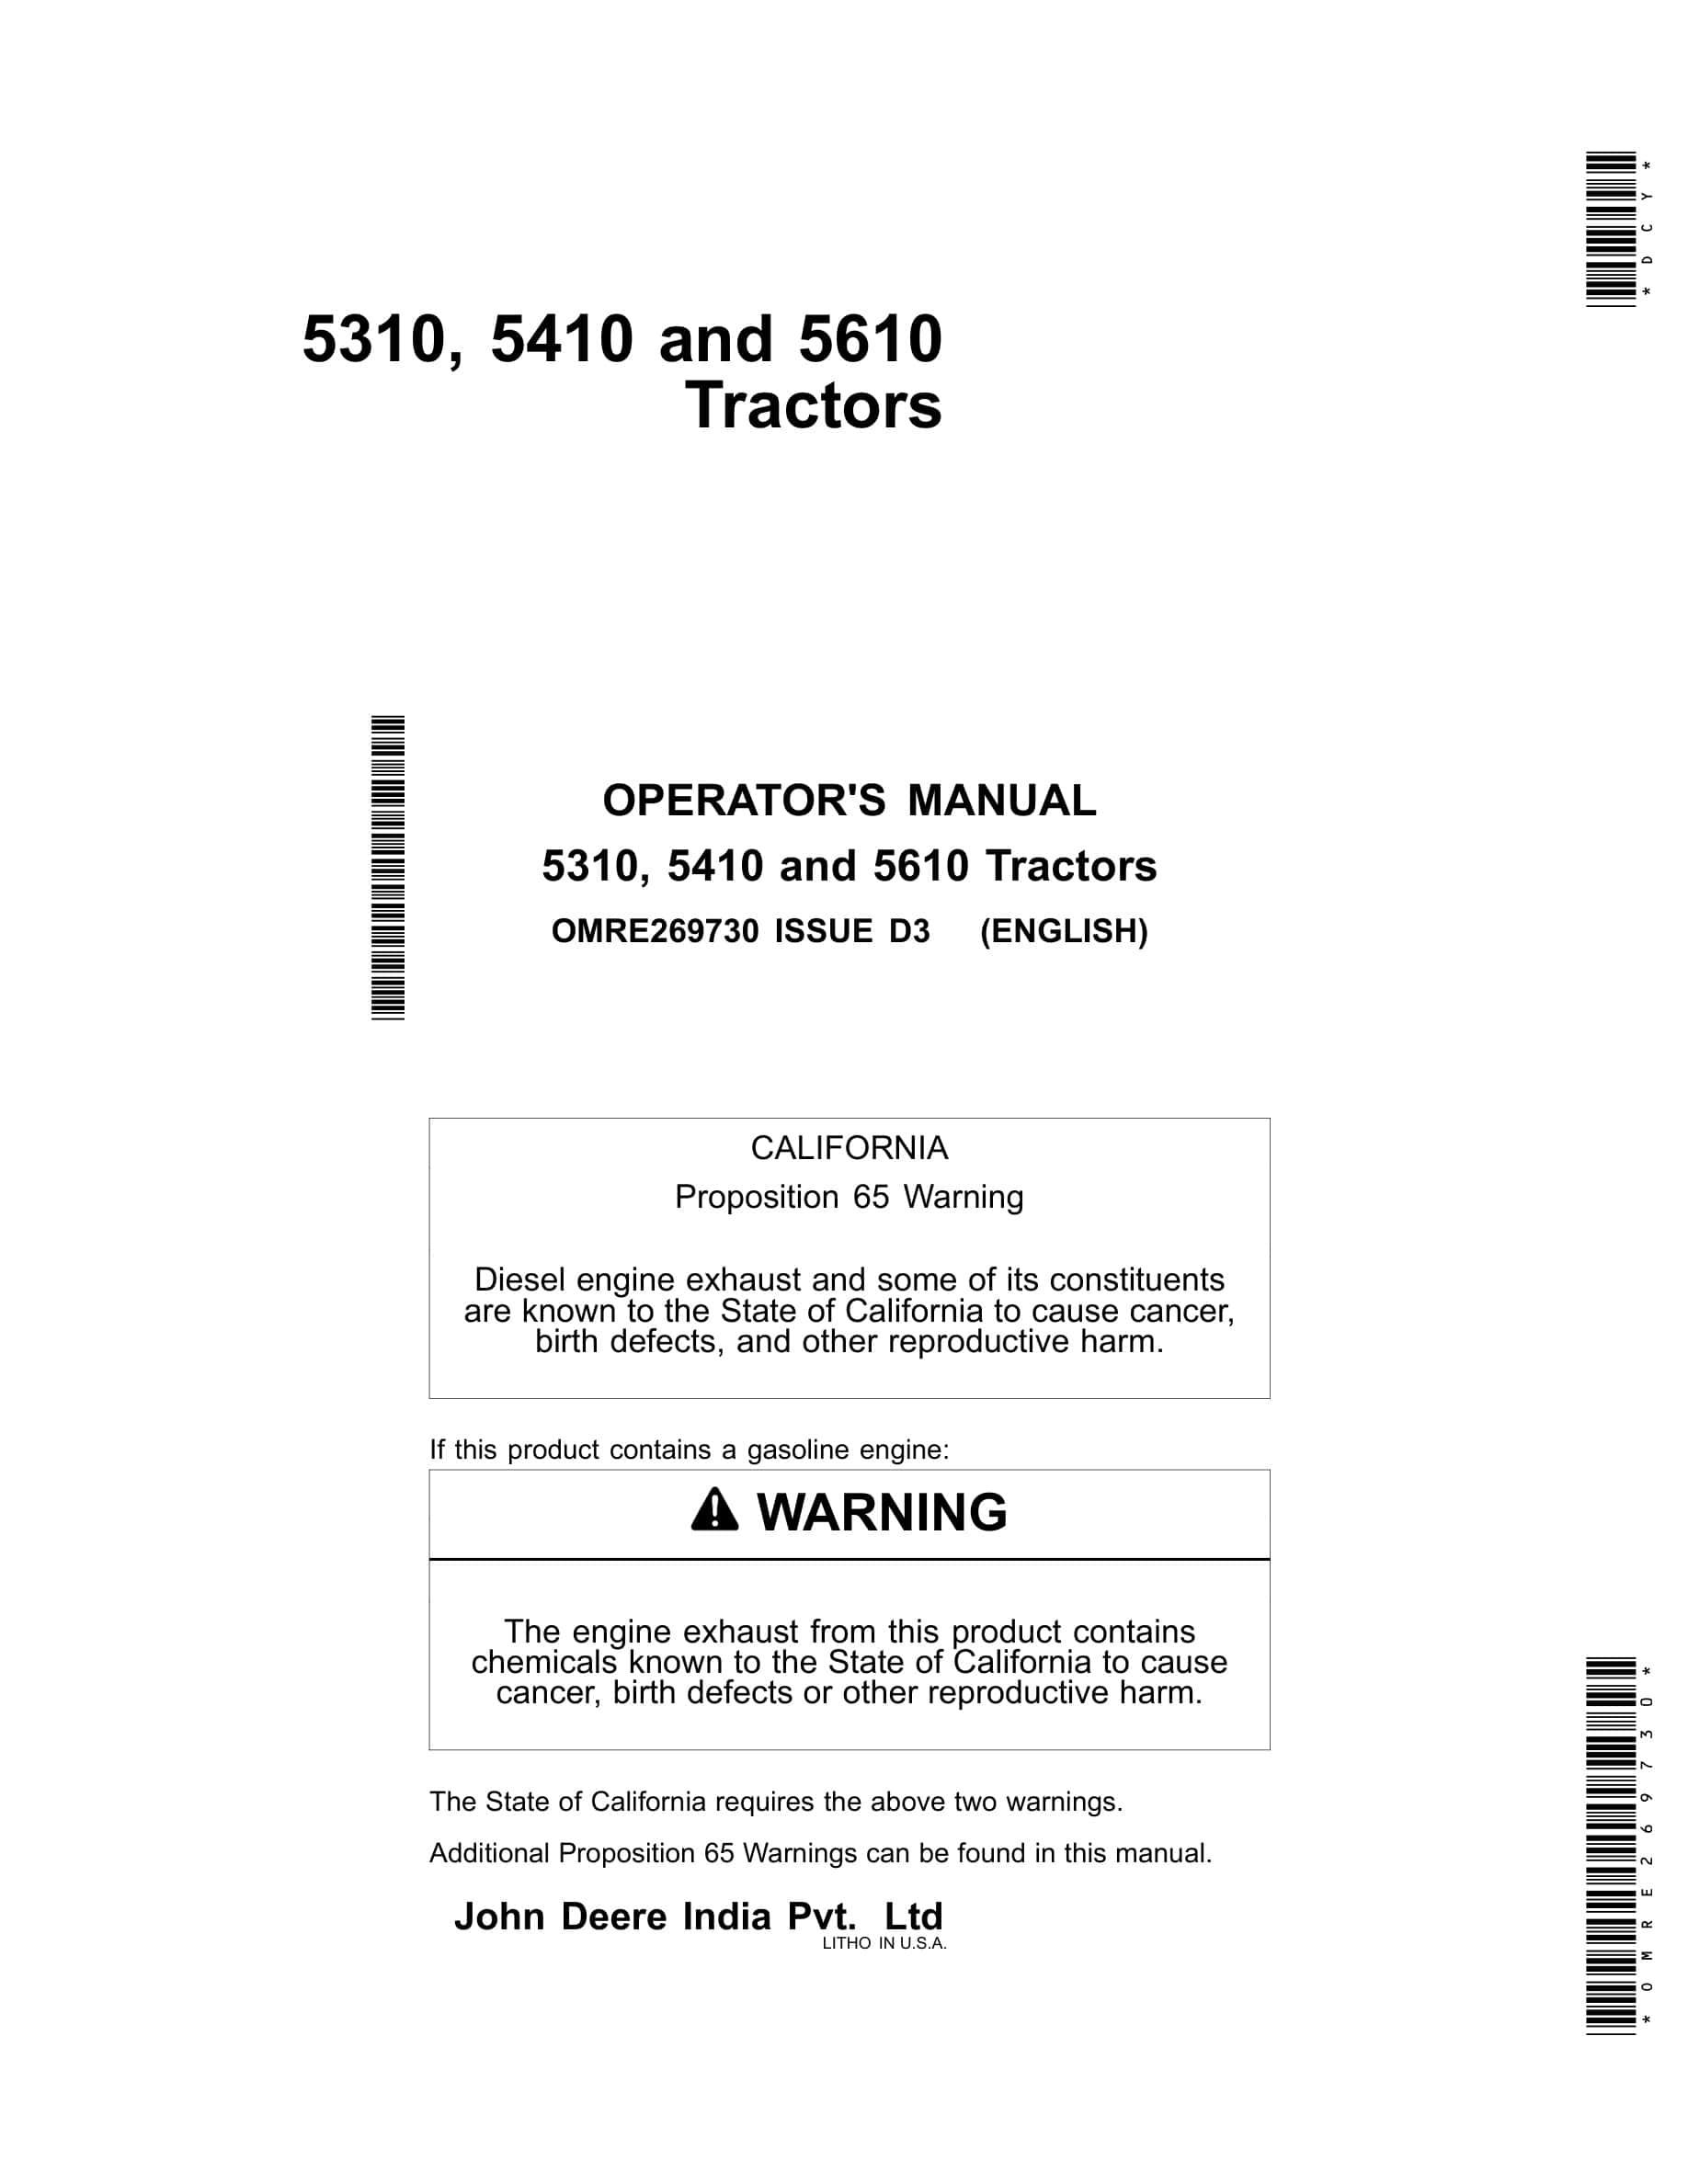 John Deere 5310, 5410 And 5610 Tractors Operator Manuals OMRE269730-1